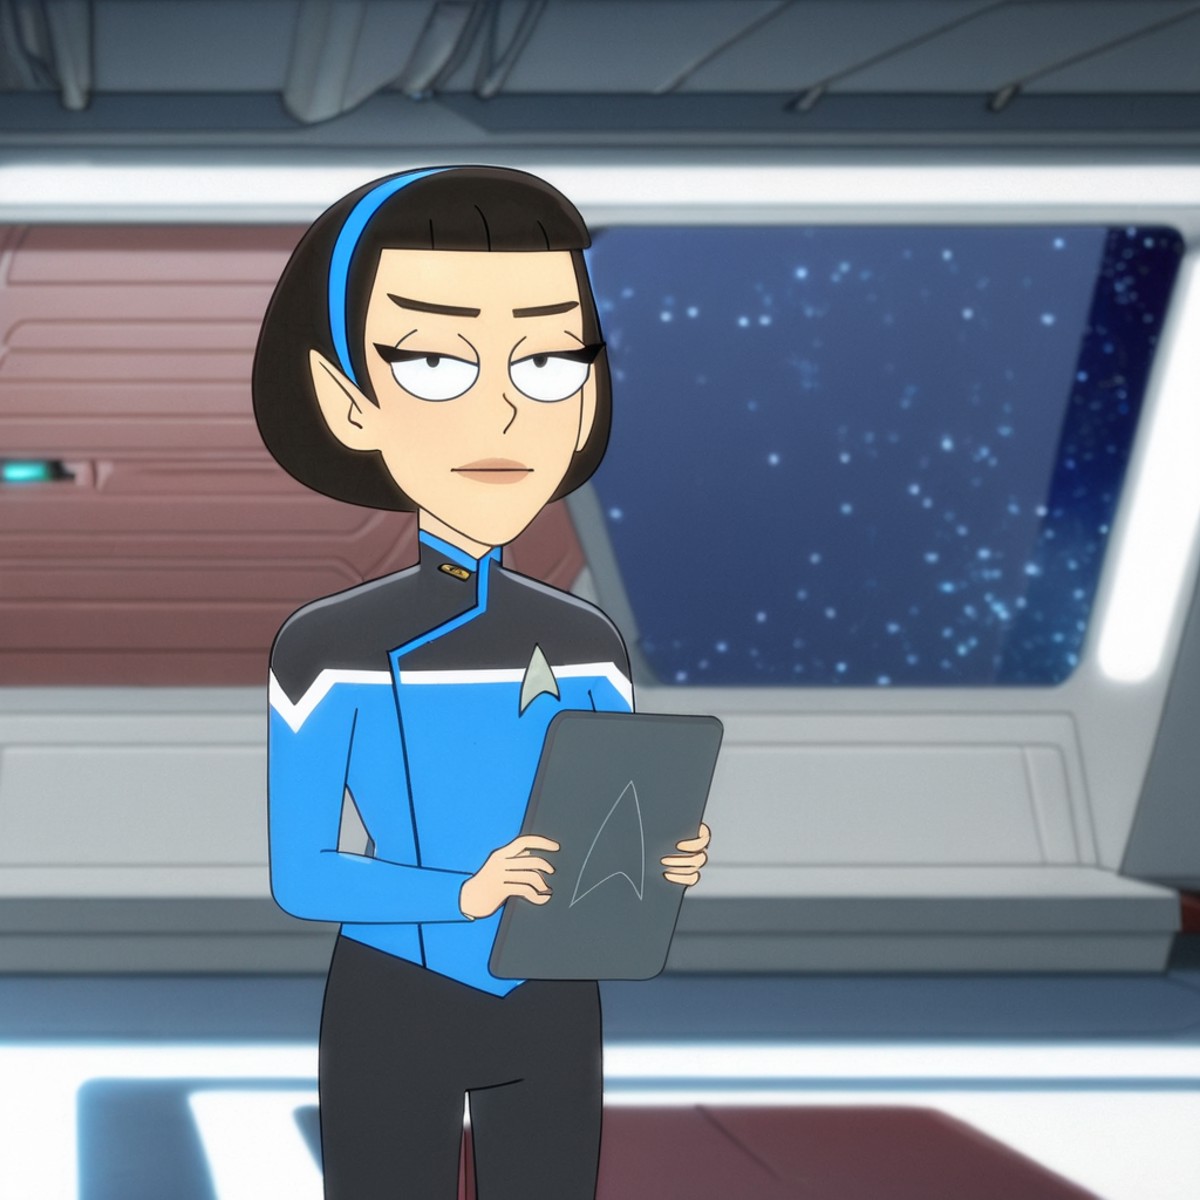 vulcan woman wearing blue starfleet uniform holding a tablet,space ship interior background